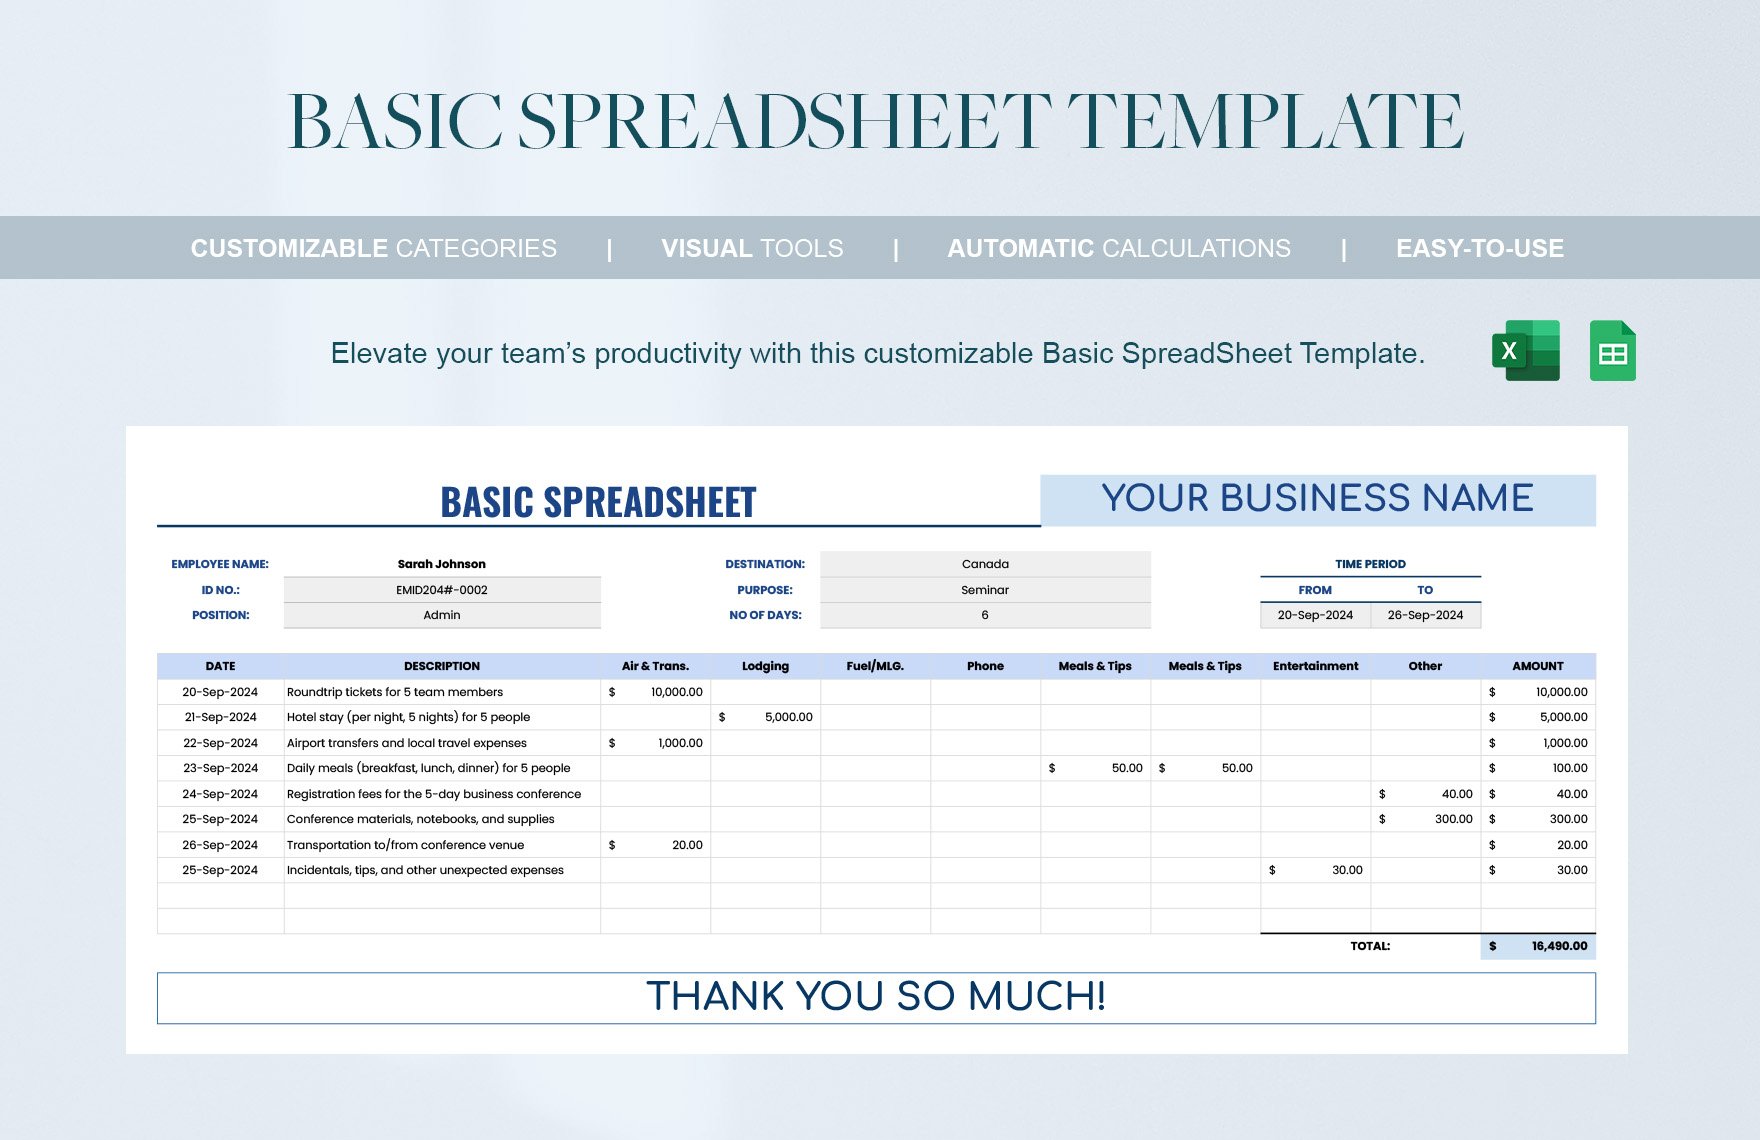 Basic SpreadSheet Template